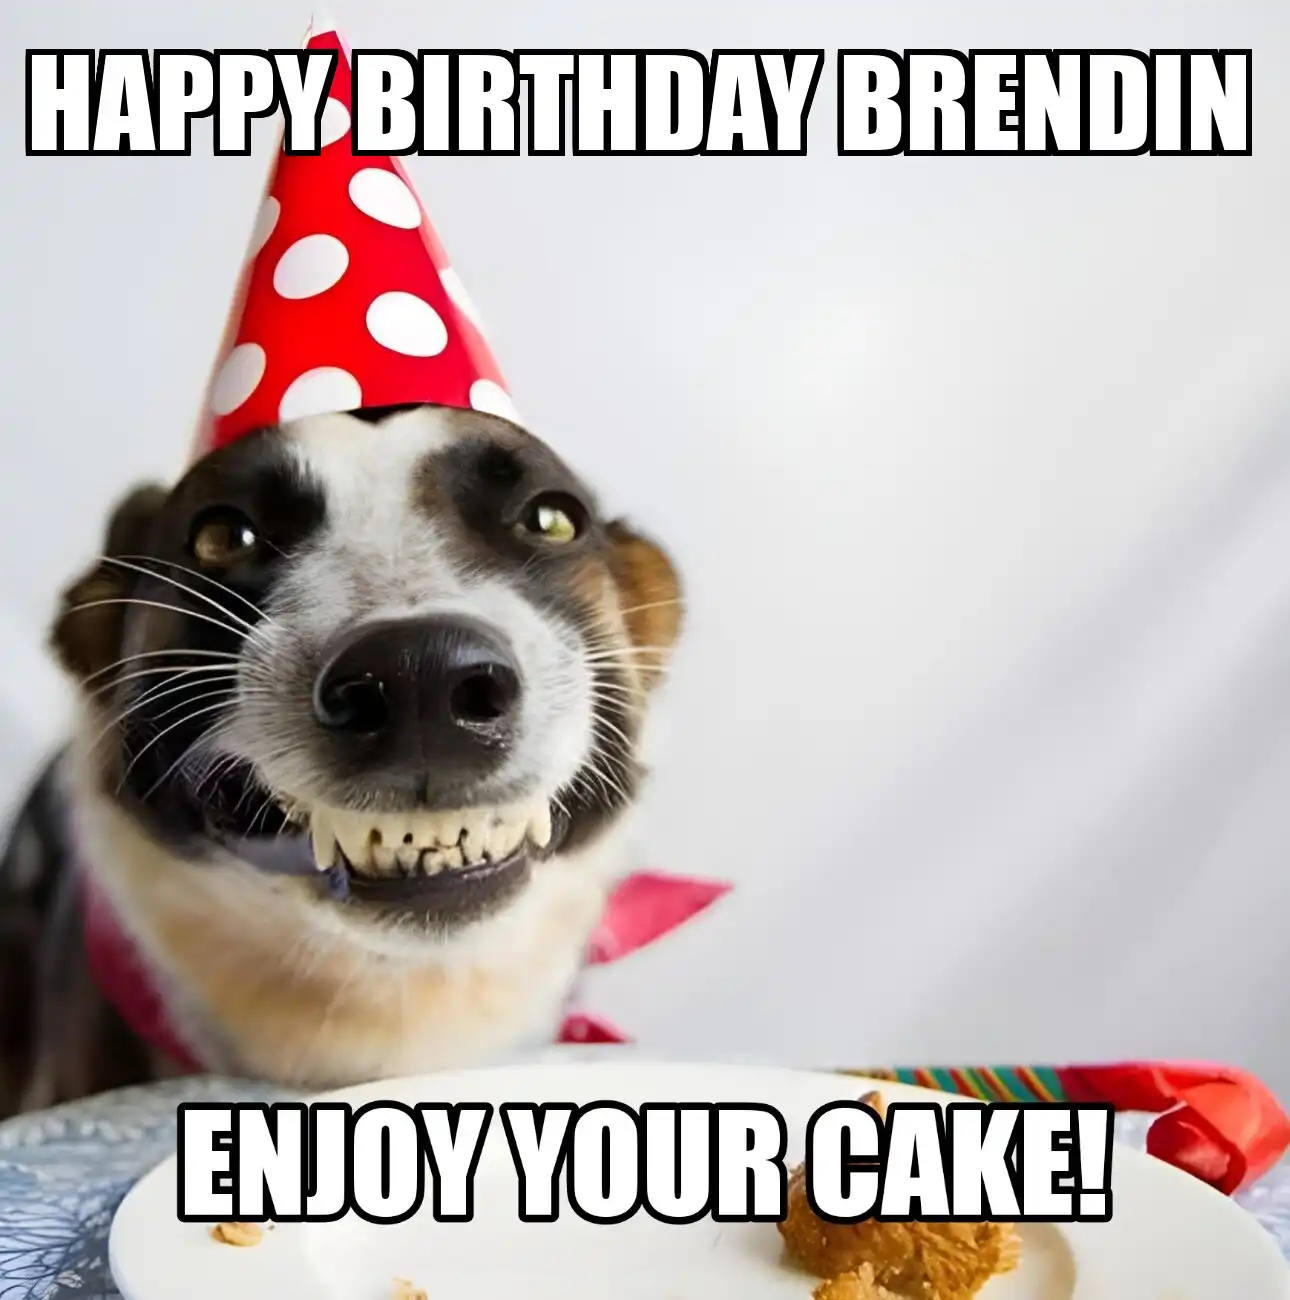 Happy Birthday Brendin Enjoy Your Cake Dog Meme